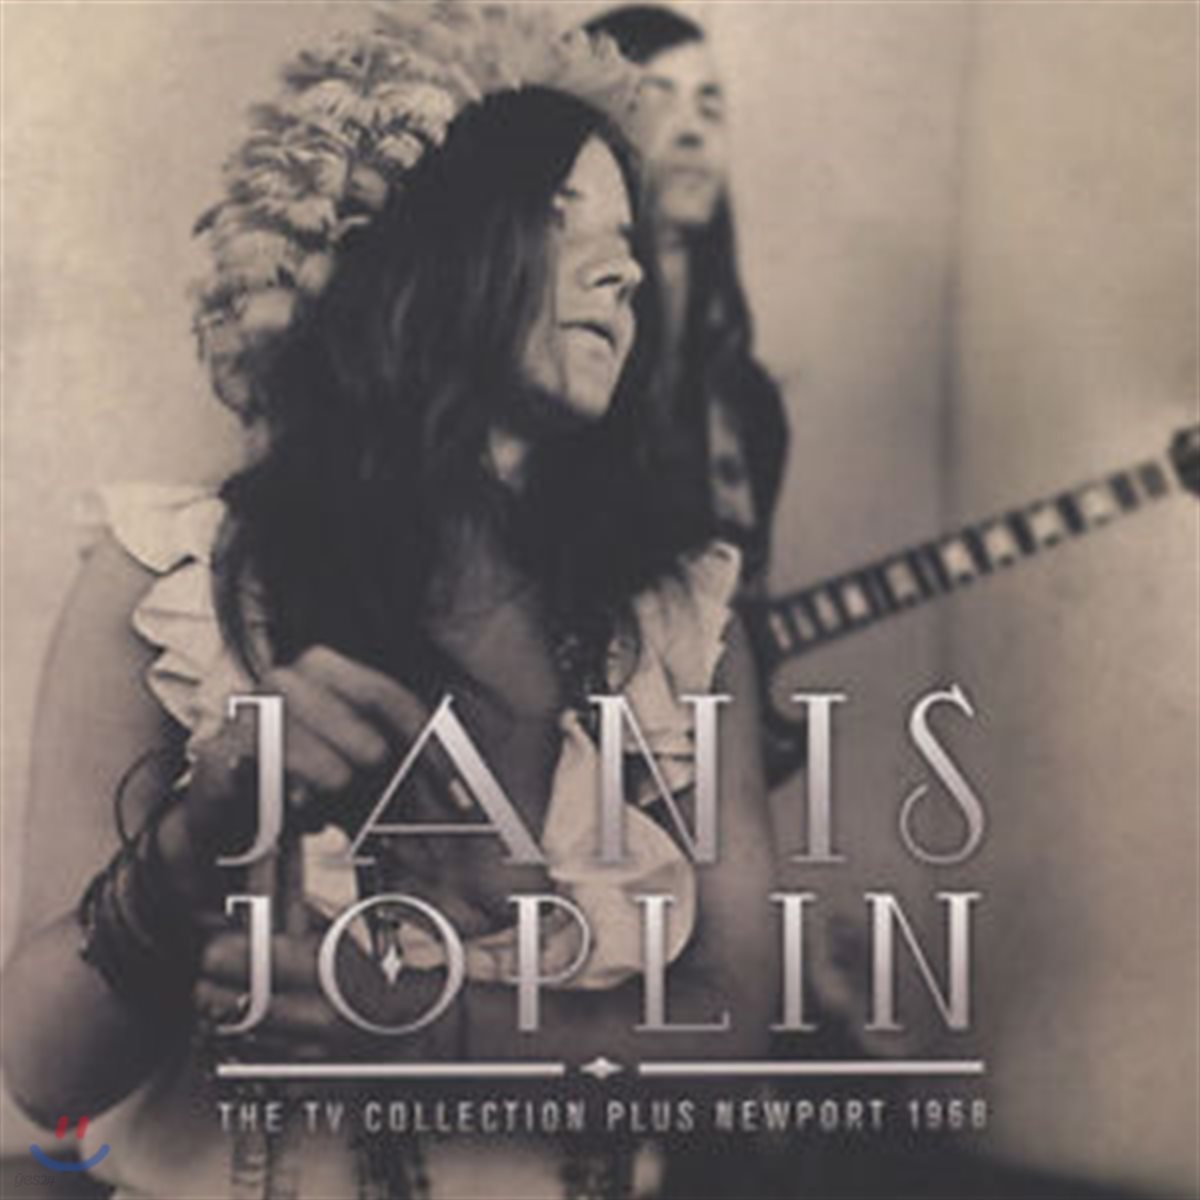 Janis Joplin (재니스 조플린) - The TV Collection Plus Newport 1968 [2LP]